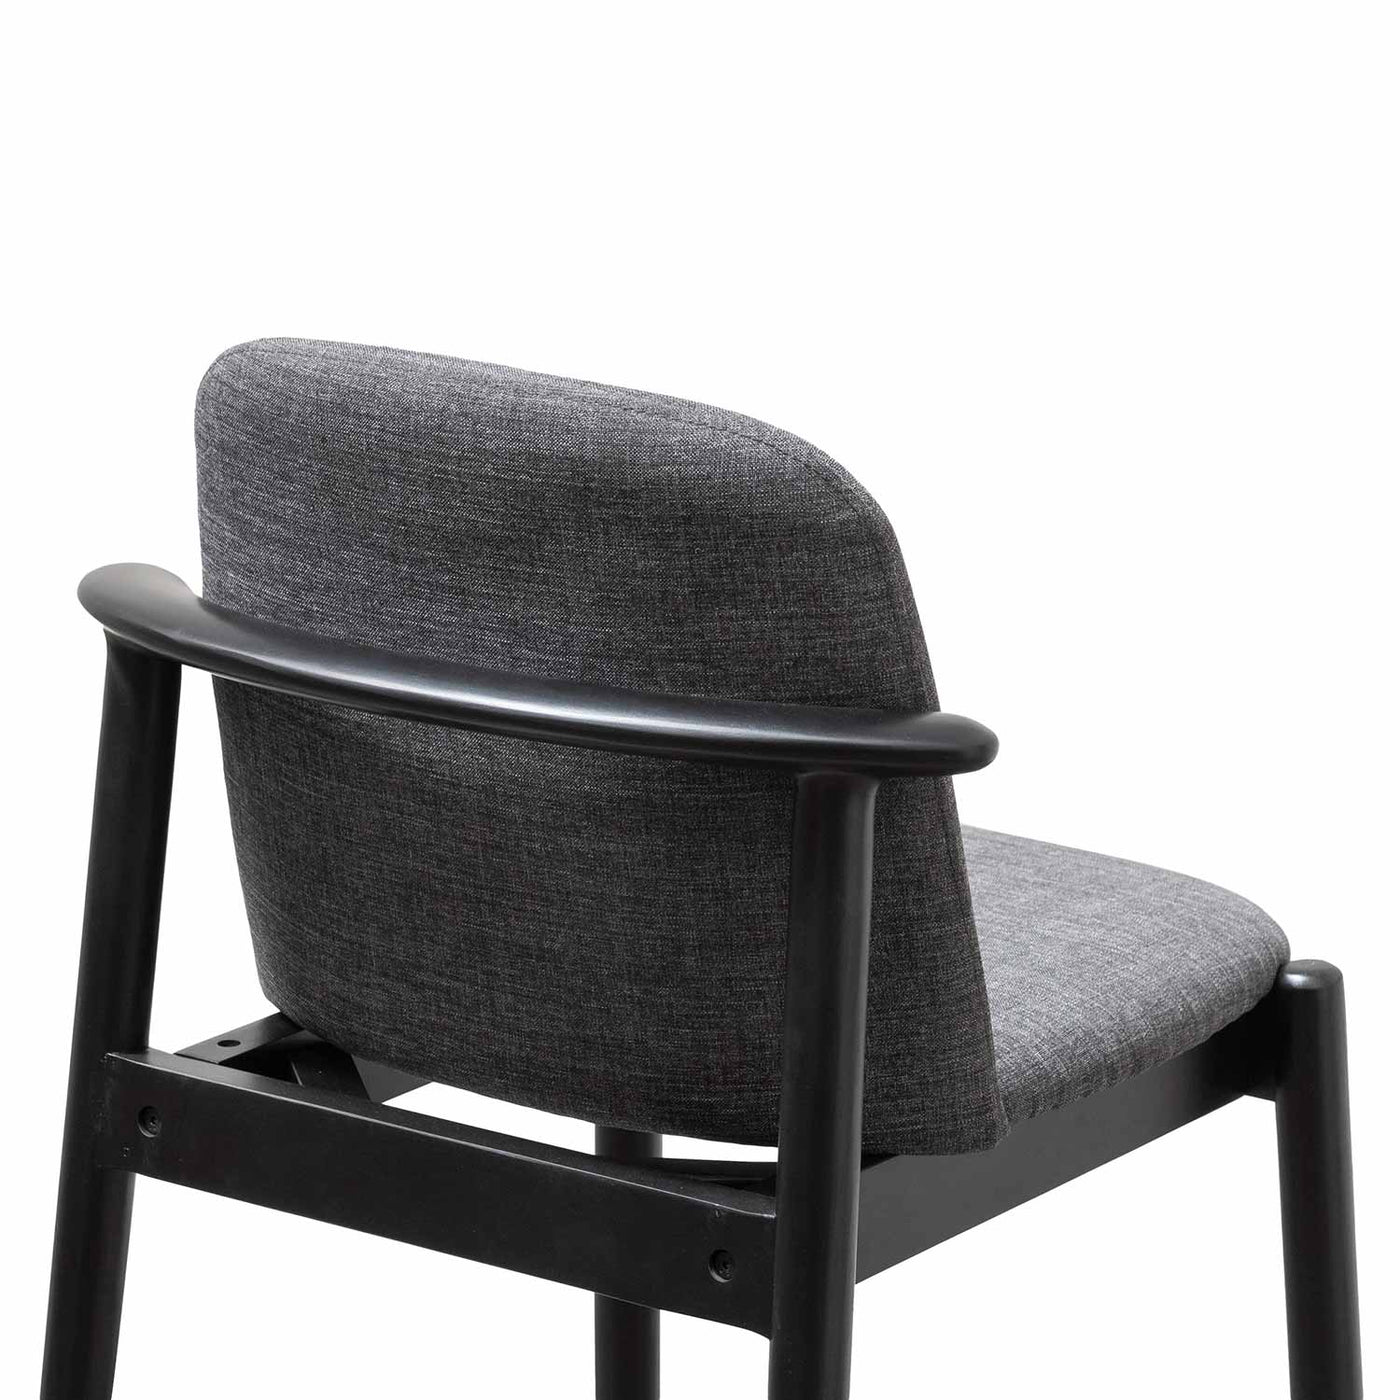 CBS6670-SD 65cm Fabric Bar Stool - Pepper Grey Seat and Black Frame